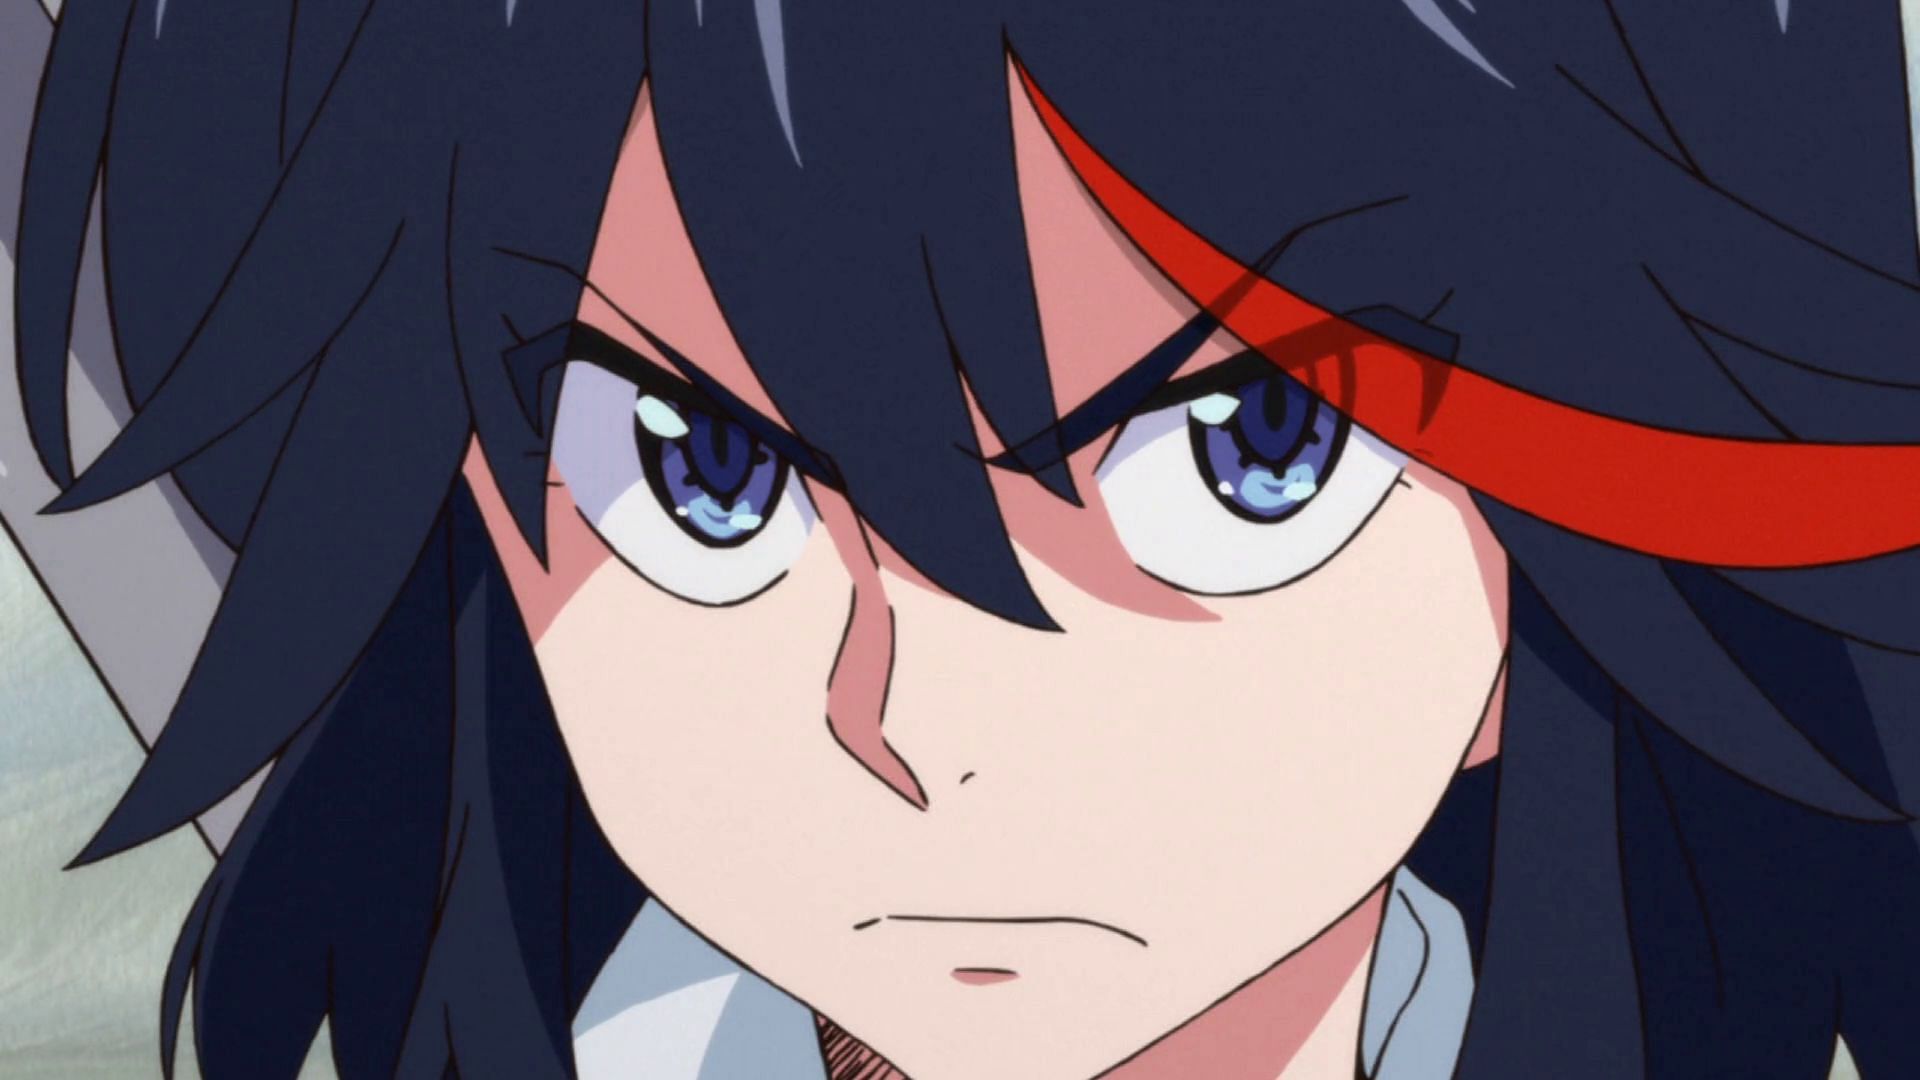 Ryuko Matoi, an iconic and angry seinen protagonist. (Image via Studio Trigger)